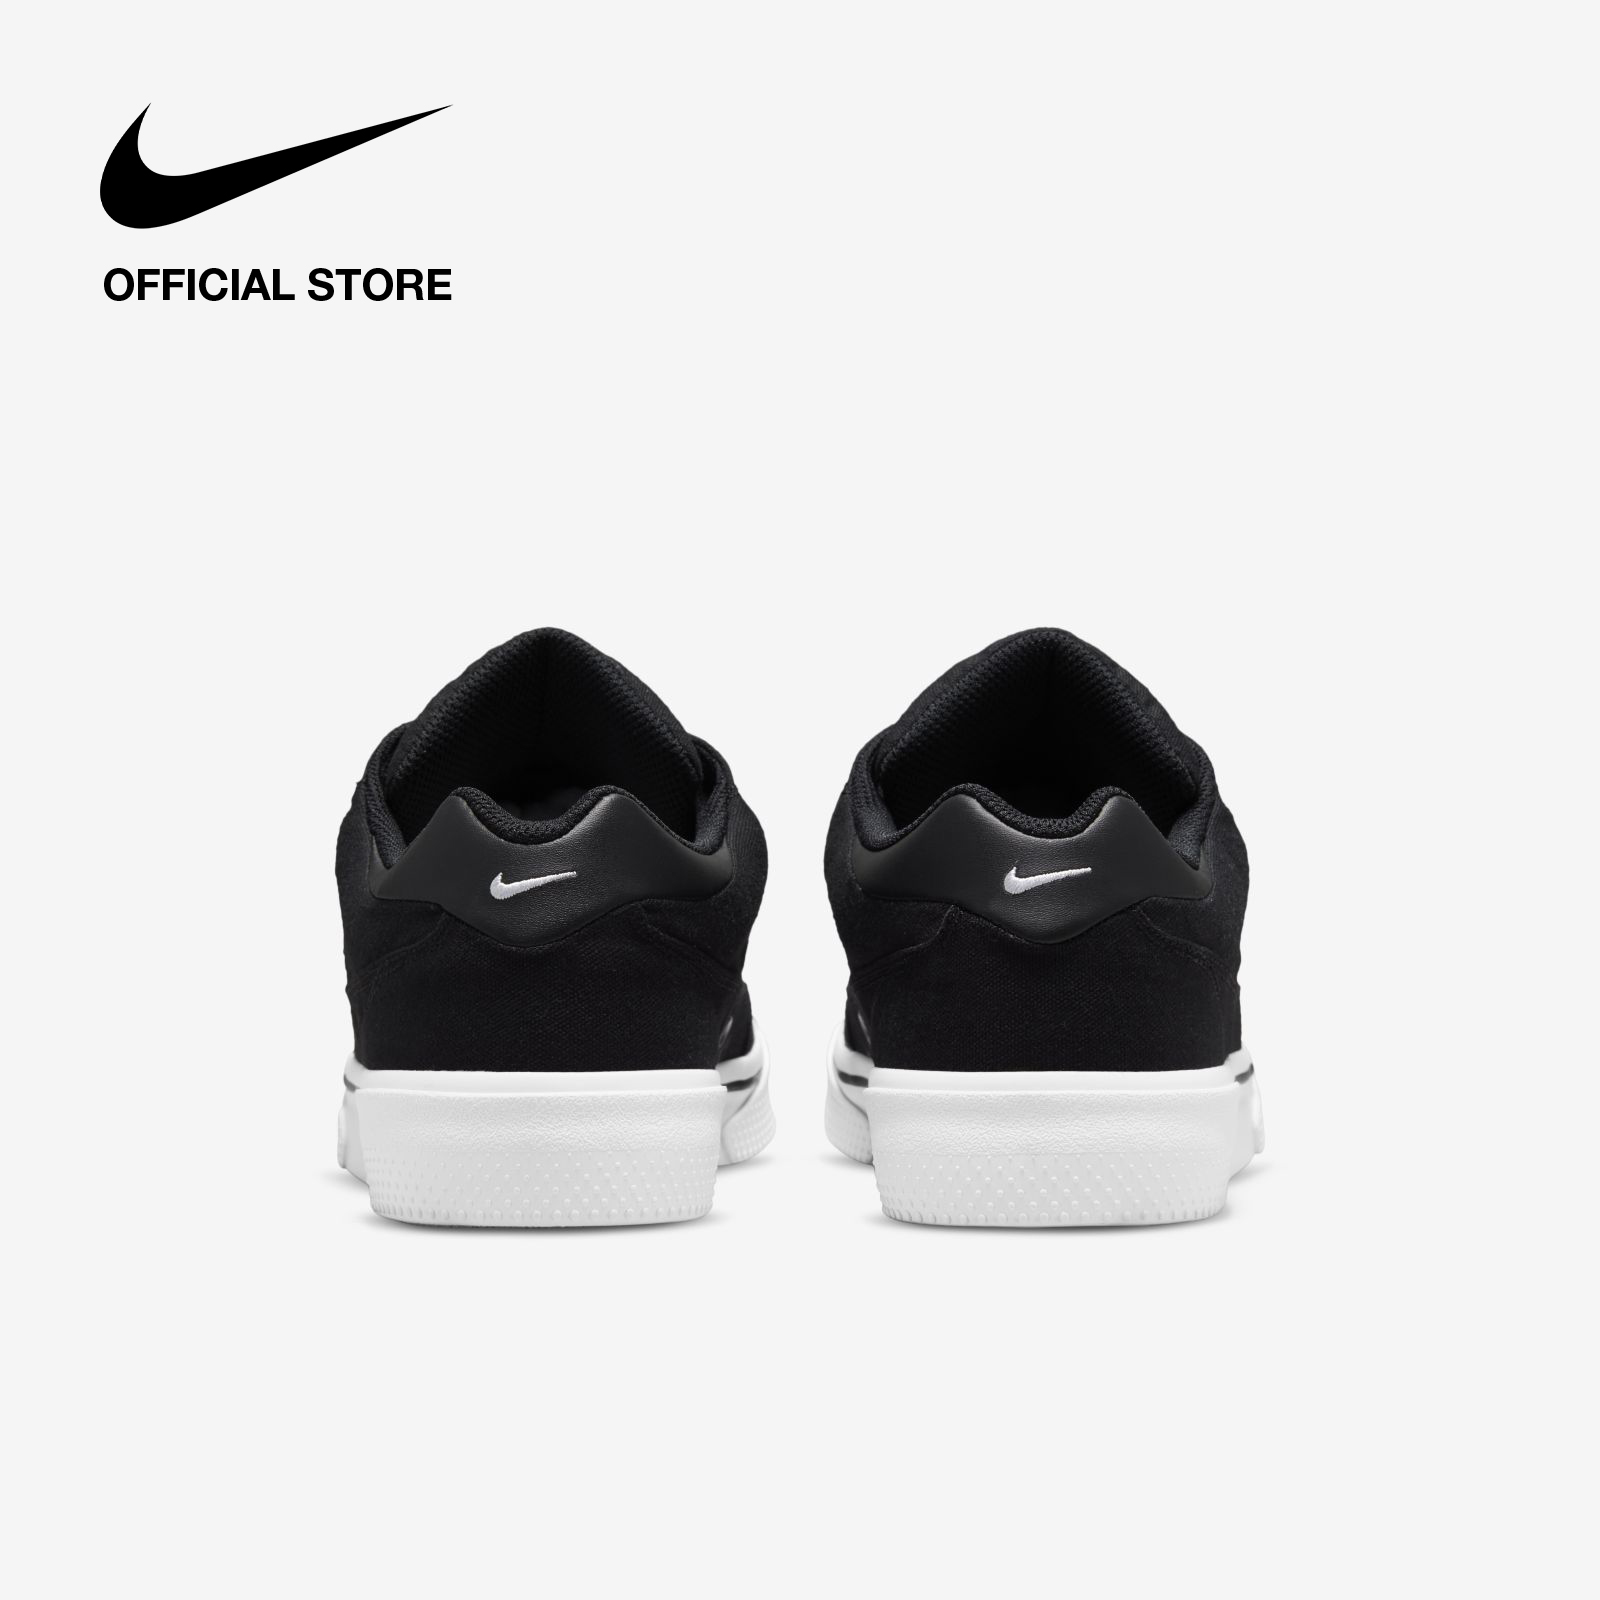 Nike Men's Retro GTS Shoes - Black ไนกี้ รองเท้าผู้ชาย เรโทร GTS - สีดำ